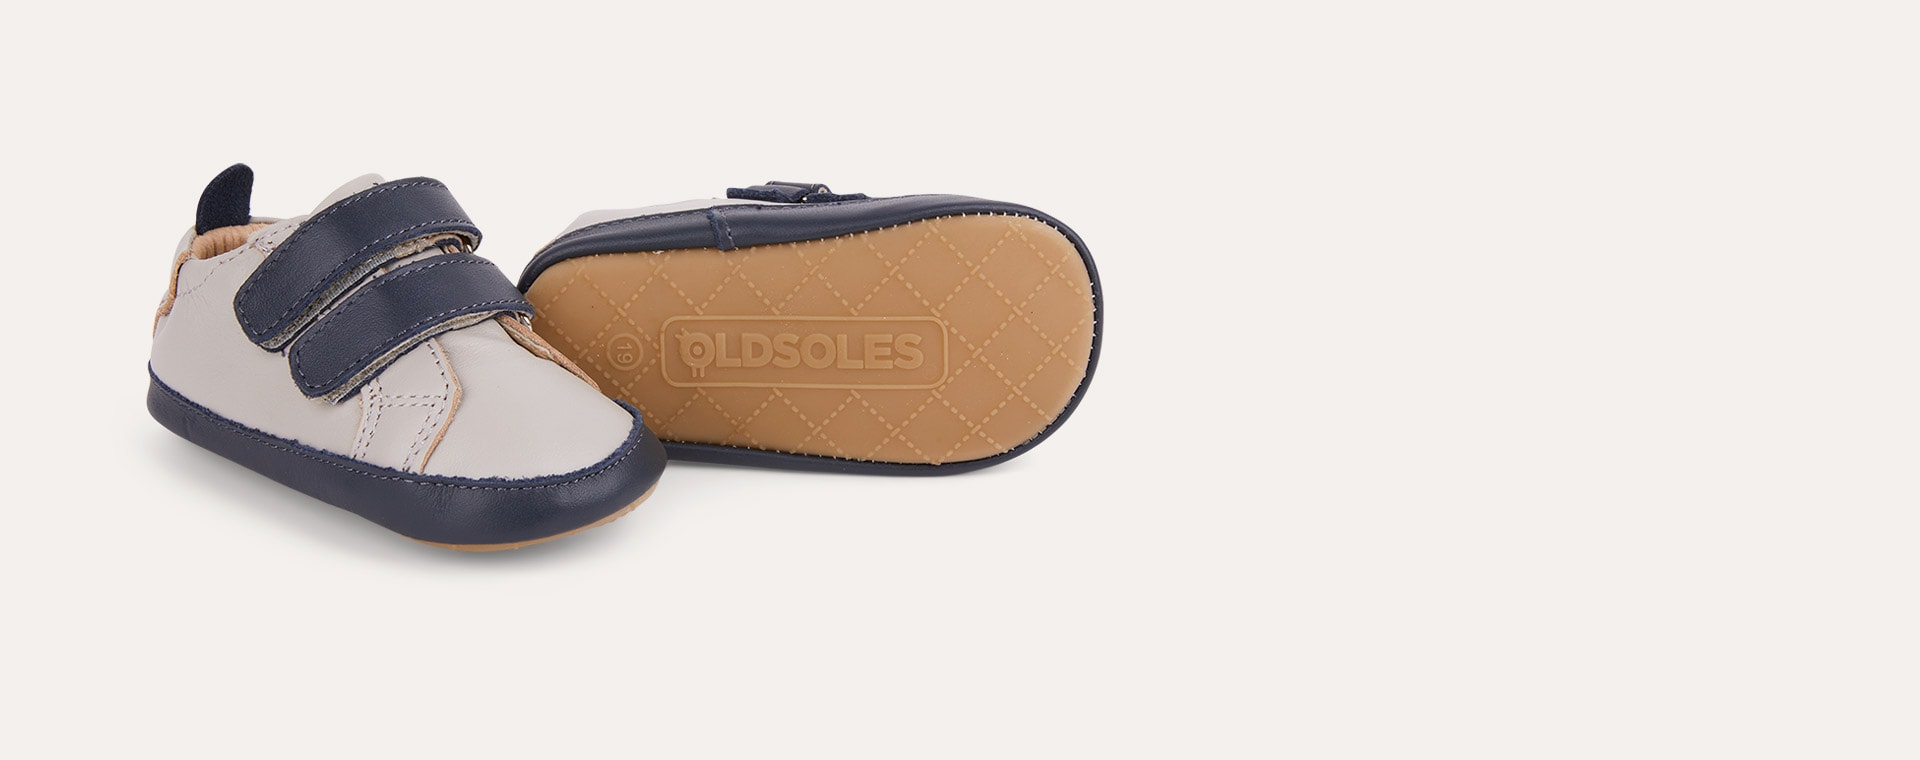 Gris / Navy old soles Eazy Market Soft sole Trainer